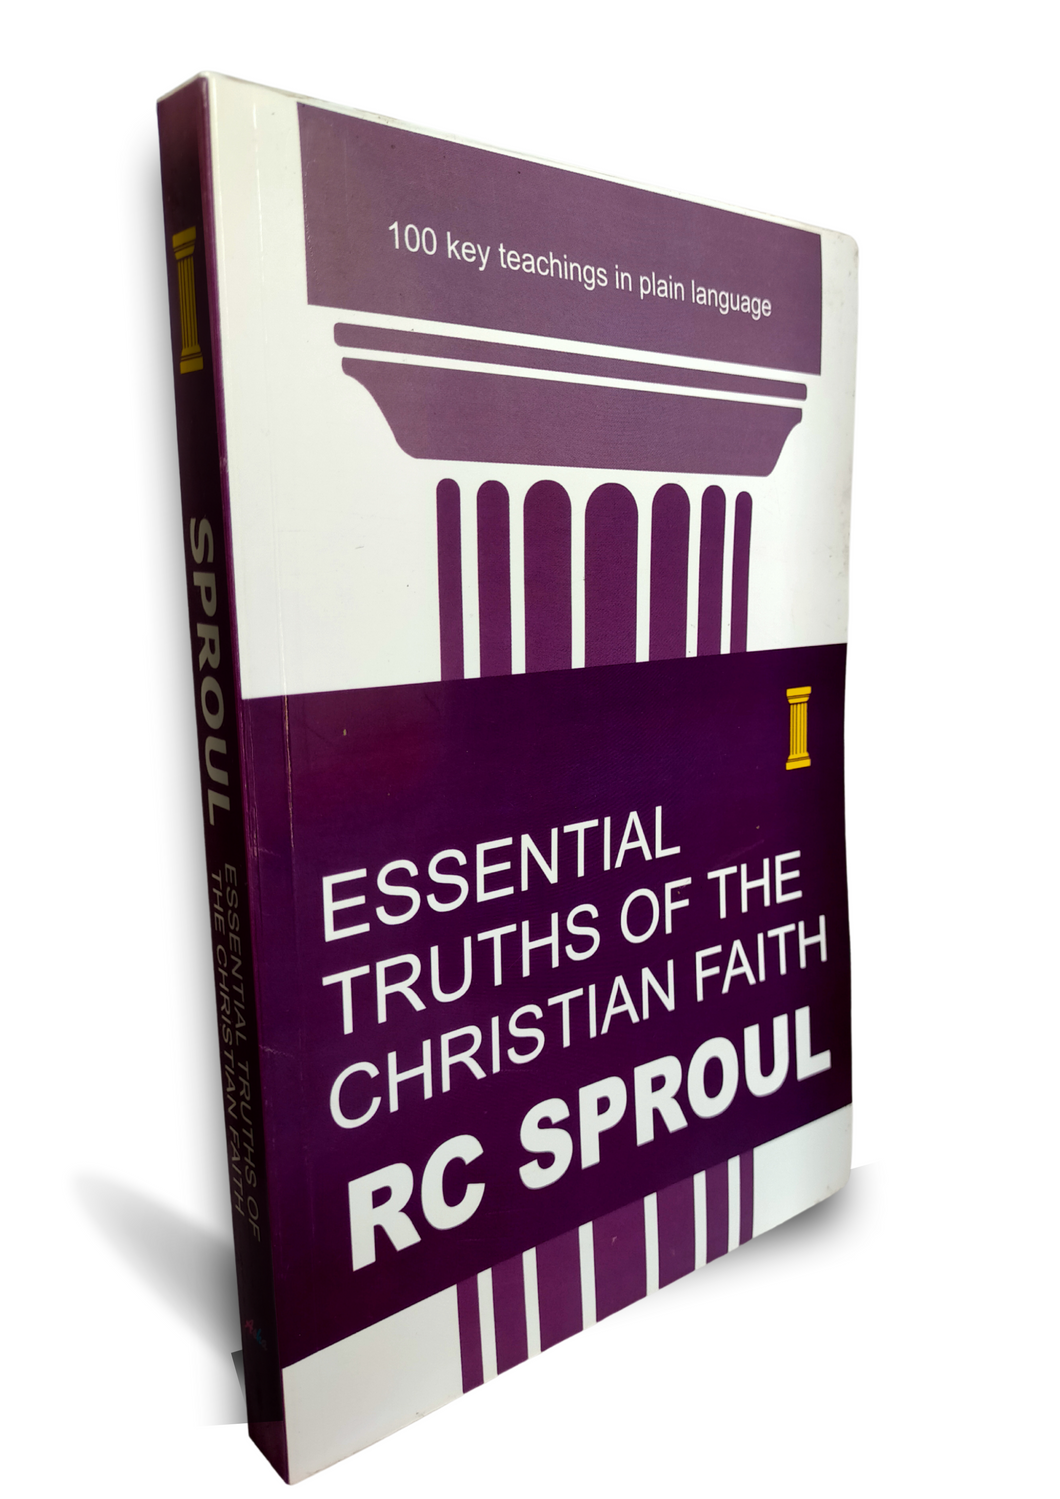 Essential Truths of the Christian Faith. RC Sproul.